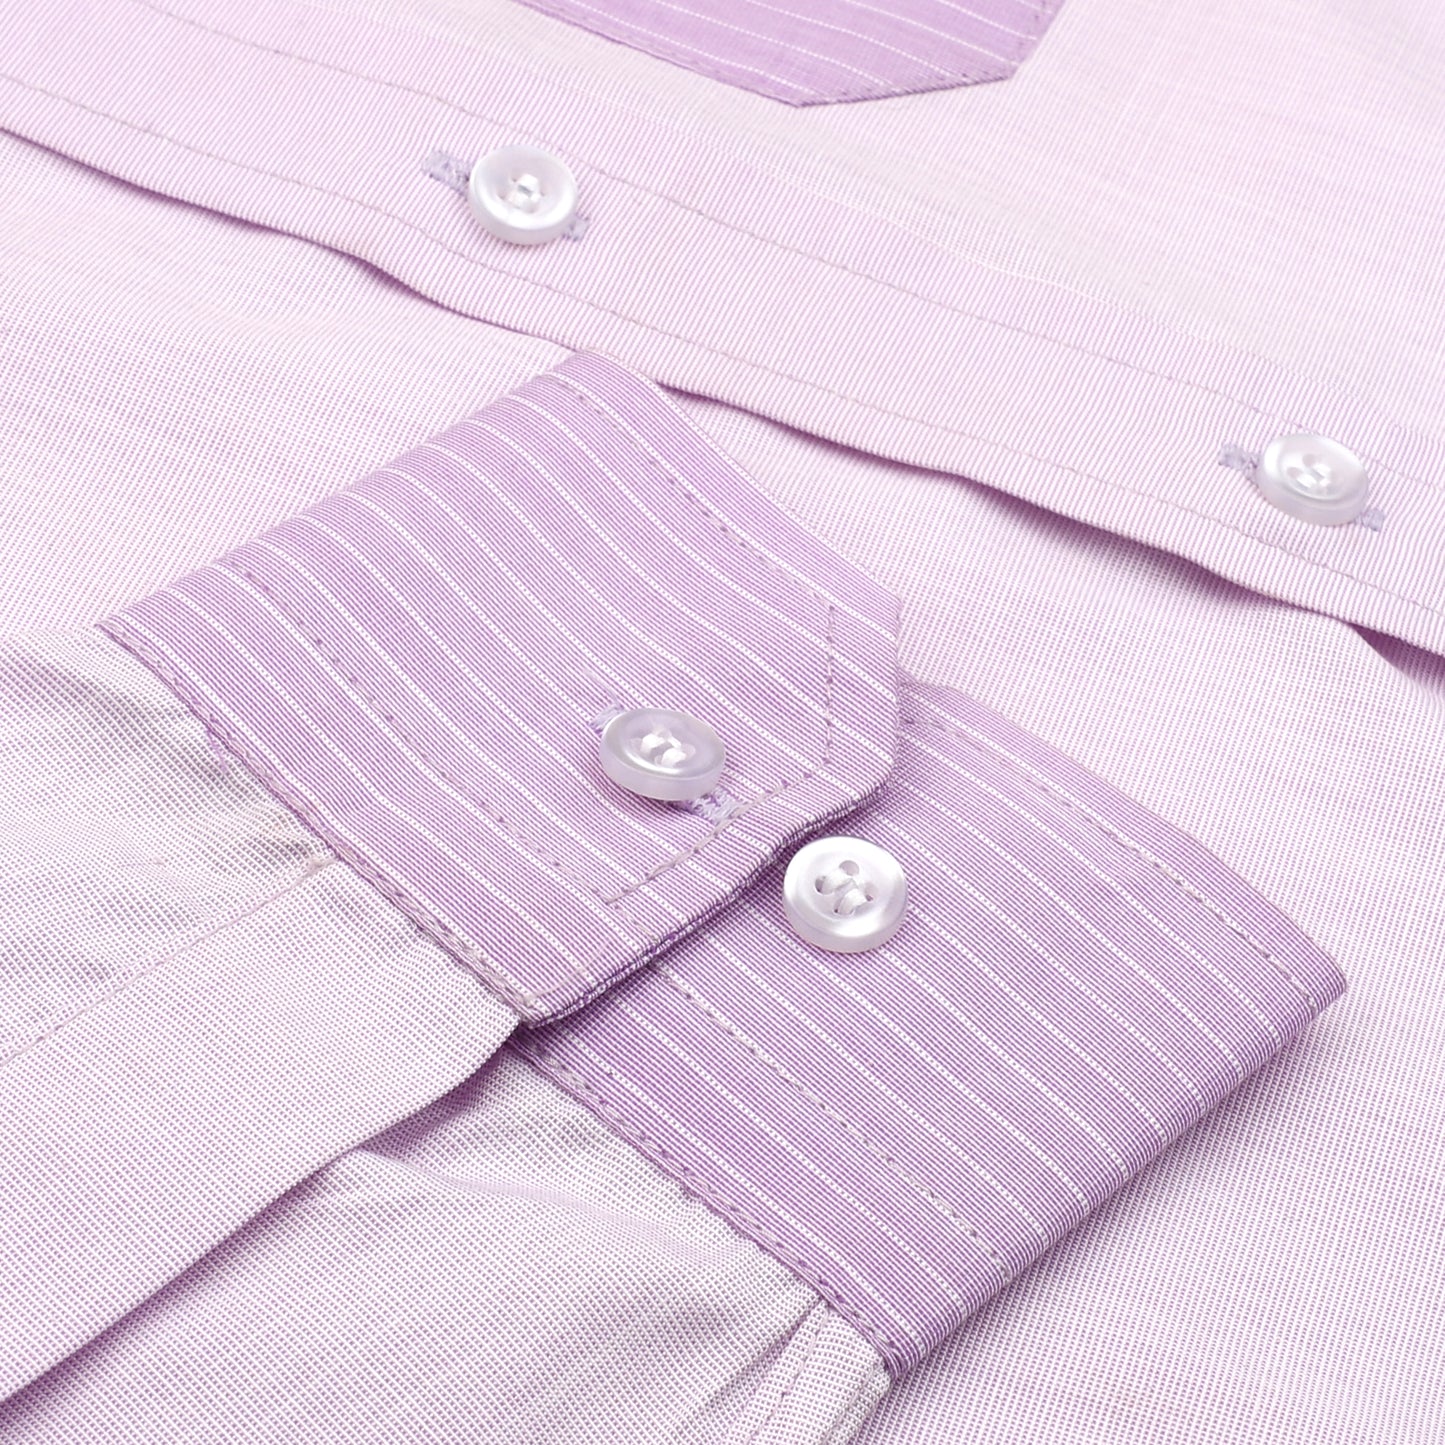 Sophisticated Men's Purple Checkered Shirt